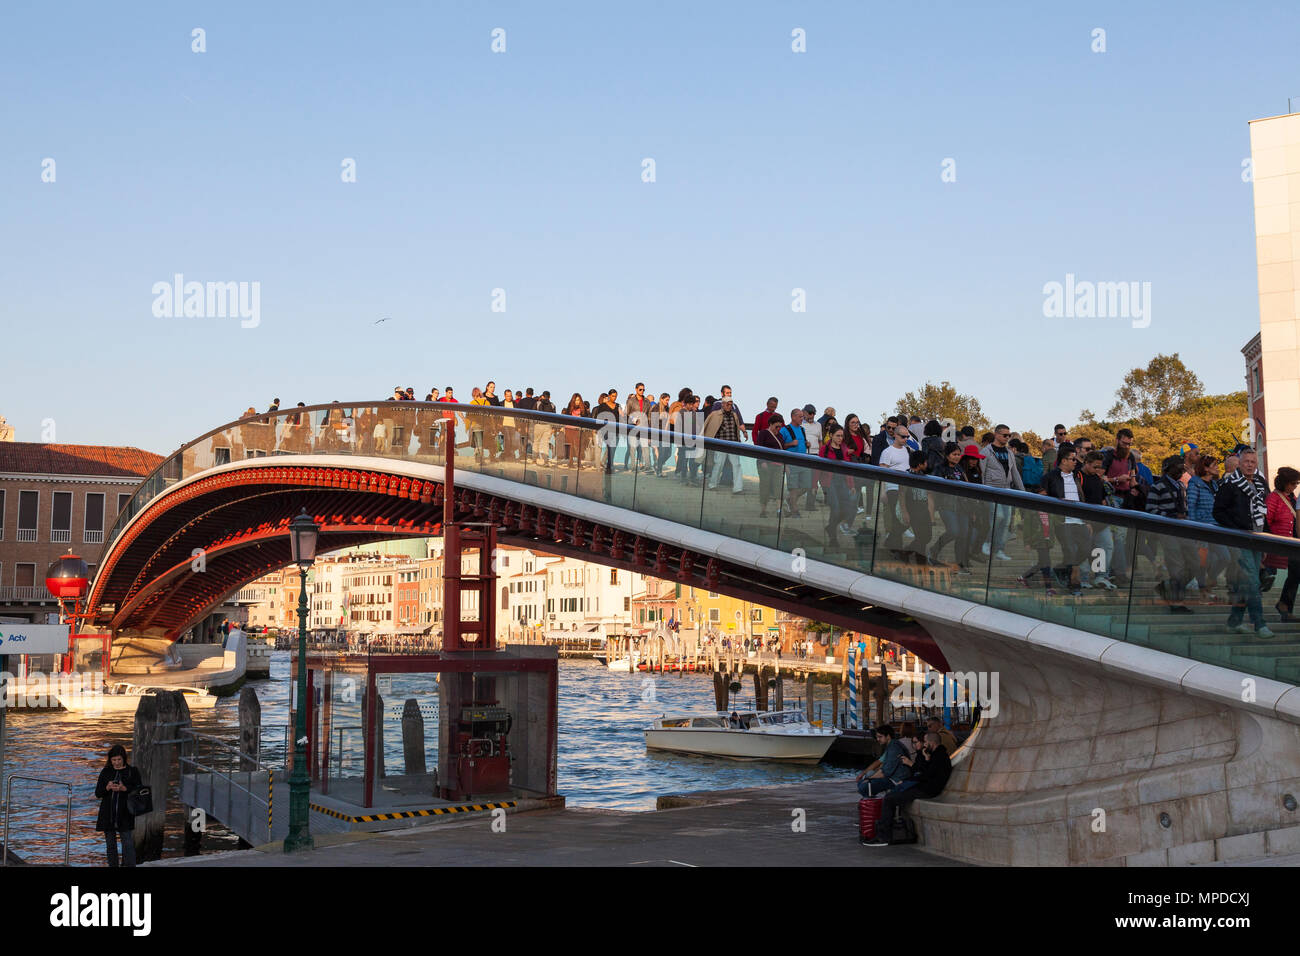 People crossing Calatrava Bridge (Ponte della Costituzione), Grand Canal at sunset, from Santa Lucia Railway Station to Piazzale Roma, Venice, Italy Stock Photo